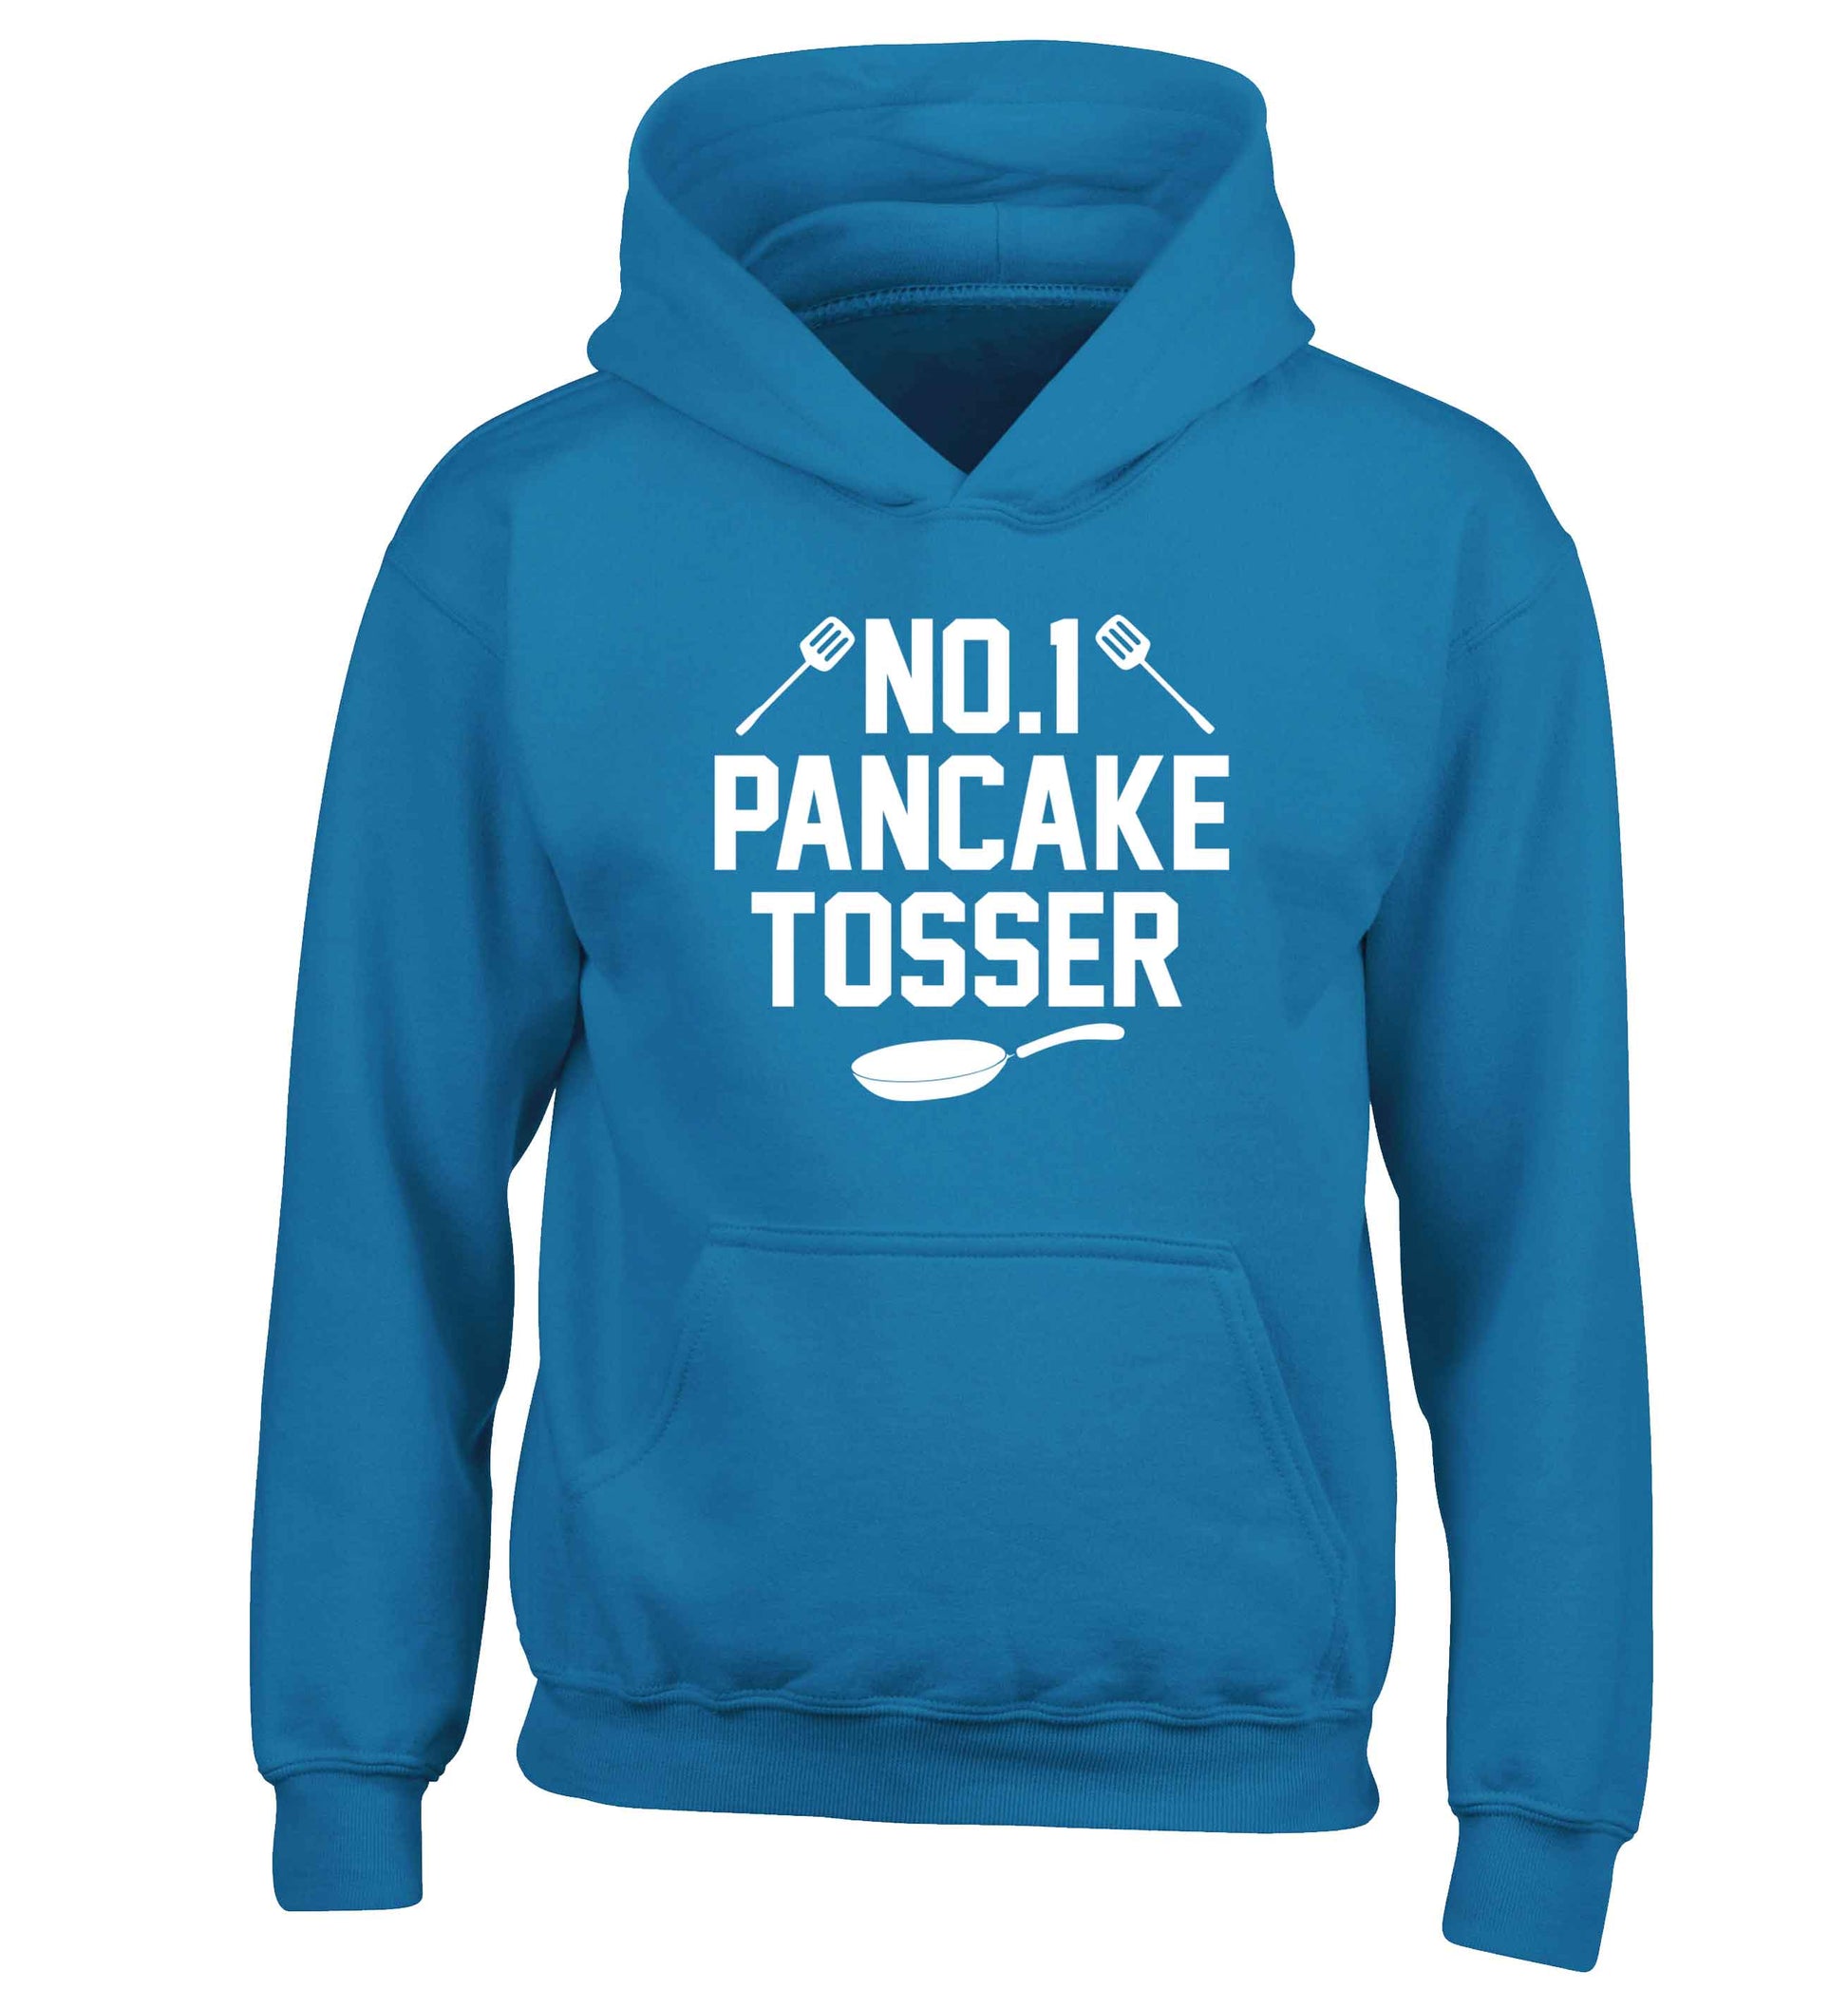 No.1 Pancake tosser children's blue hoodie 12-13 Years